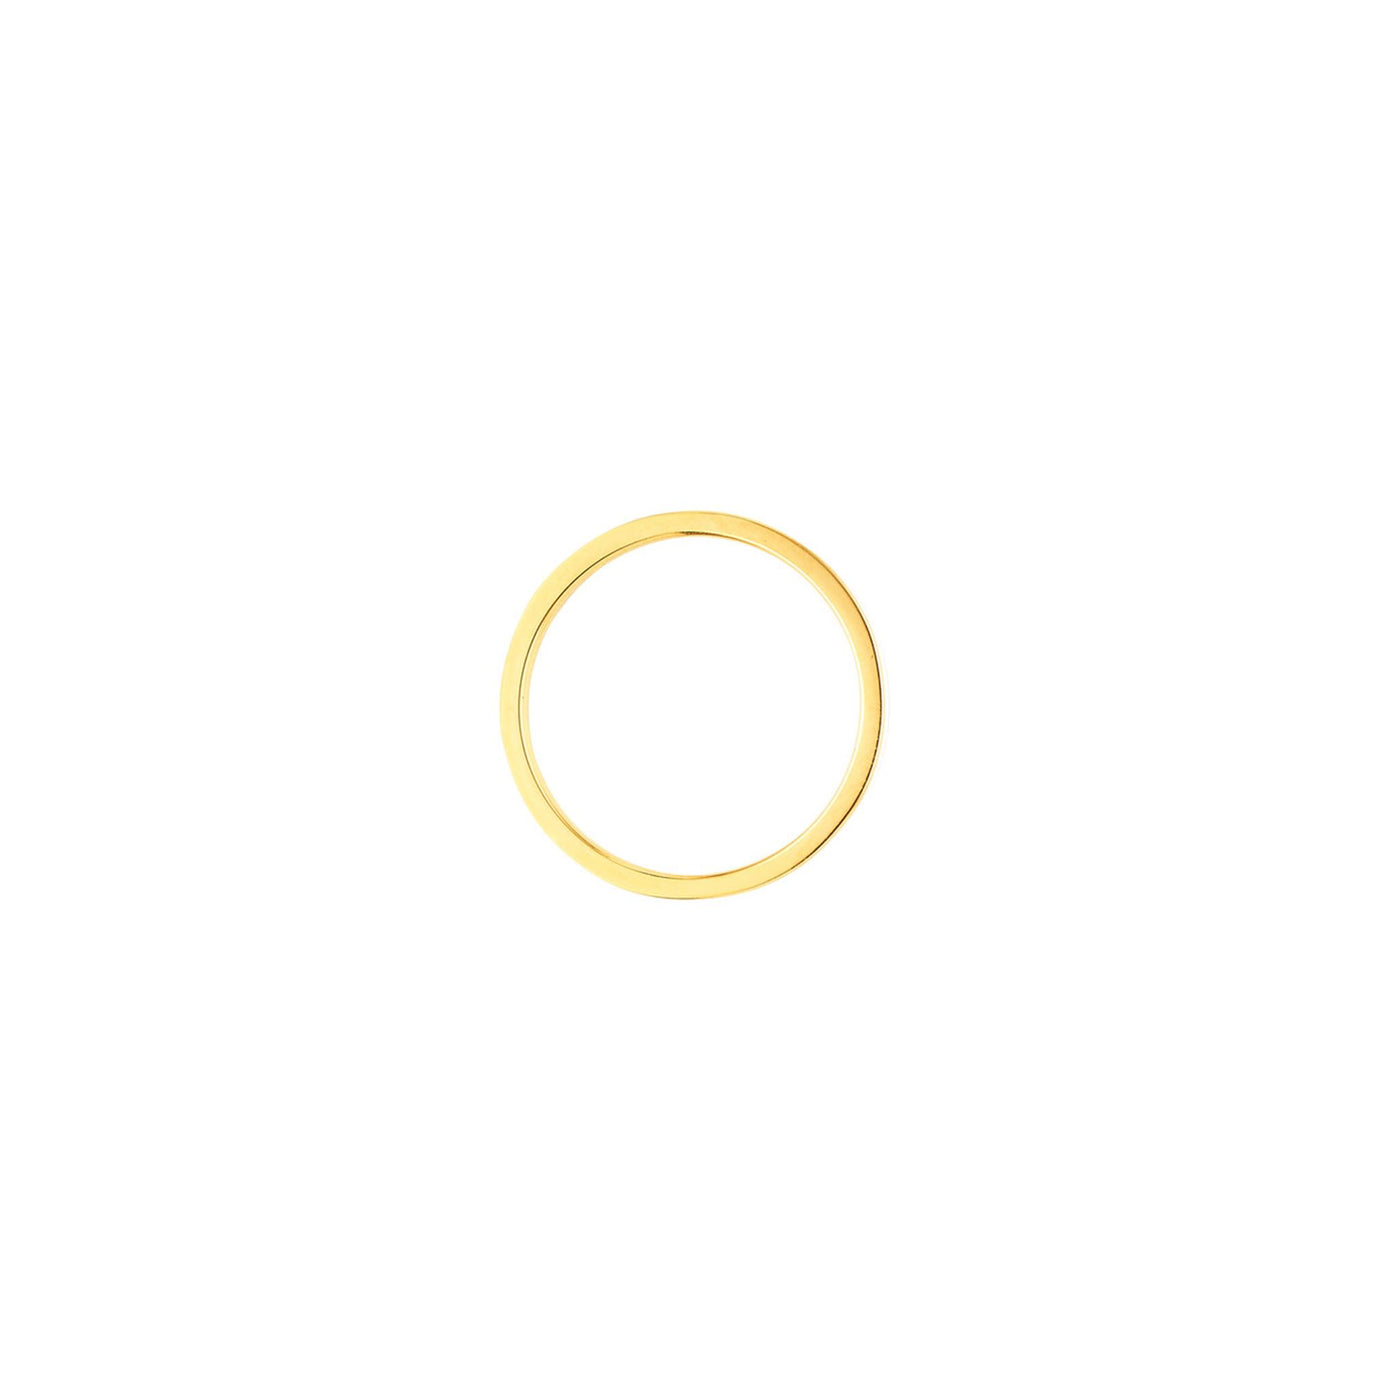 14K Yellow Gold White Enamel Traditional Style Ring